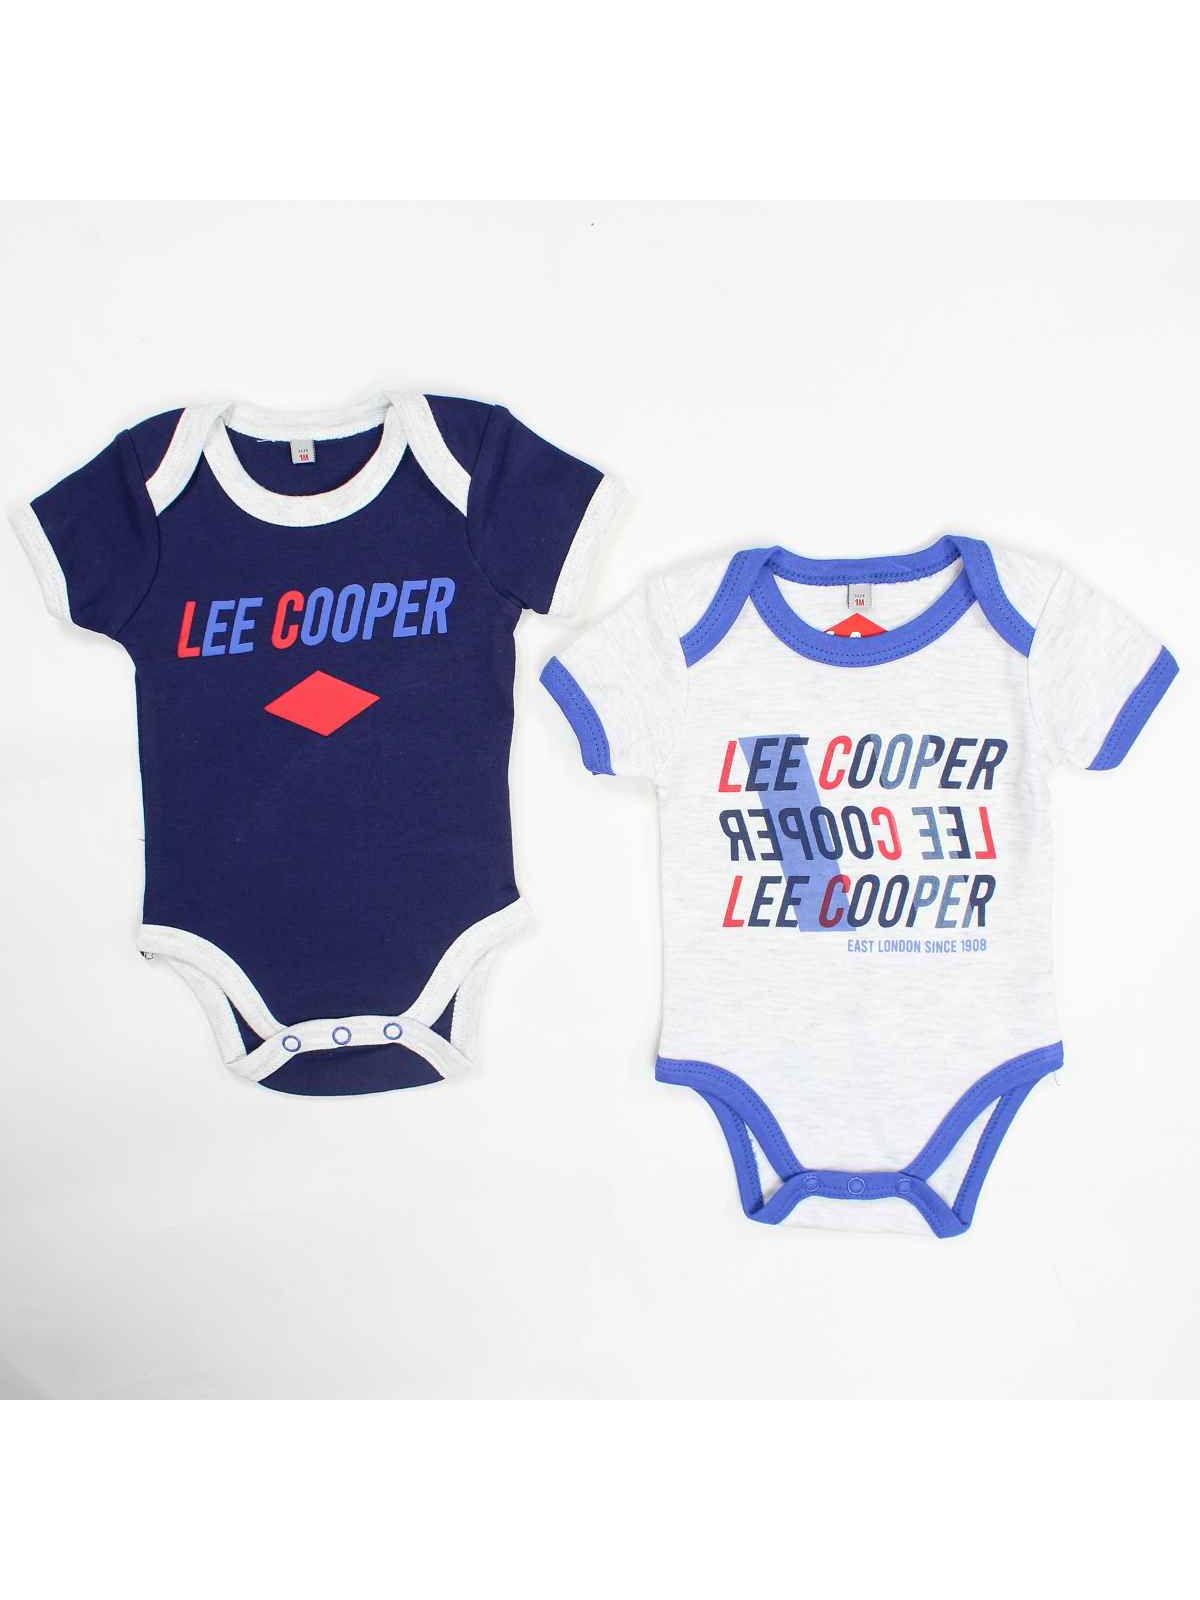 Lee Cooper Lot of 2 Bodies